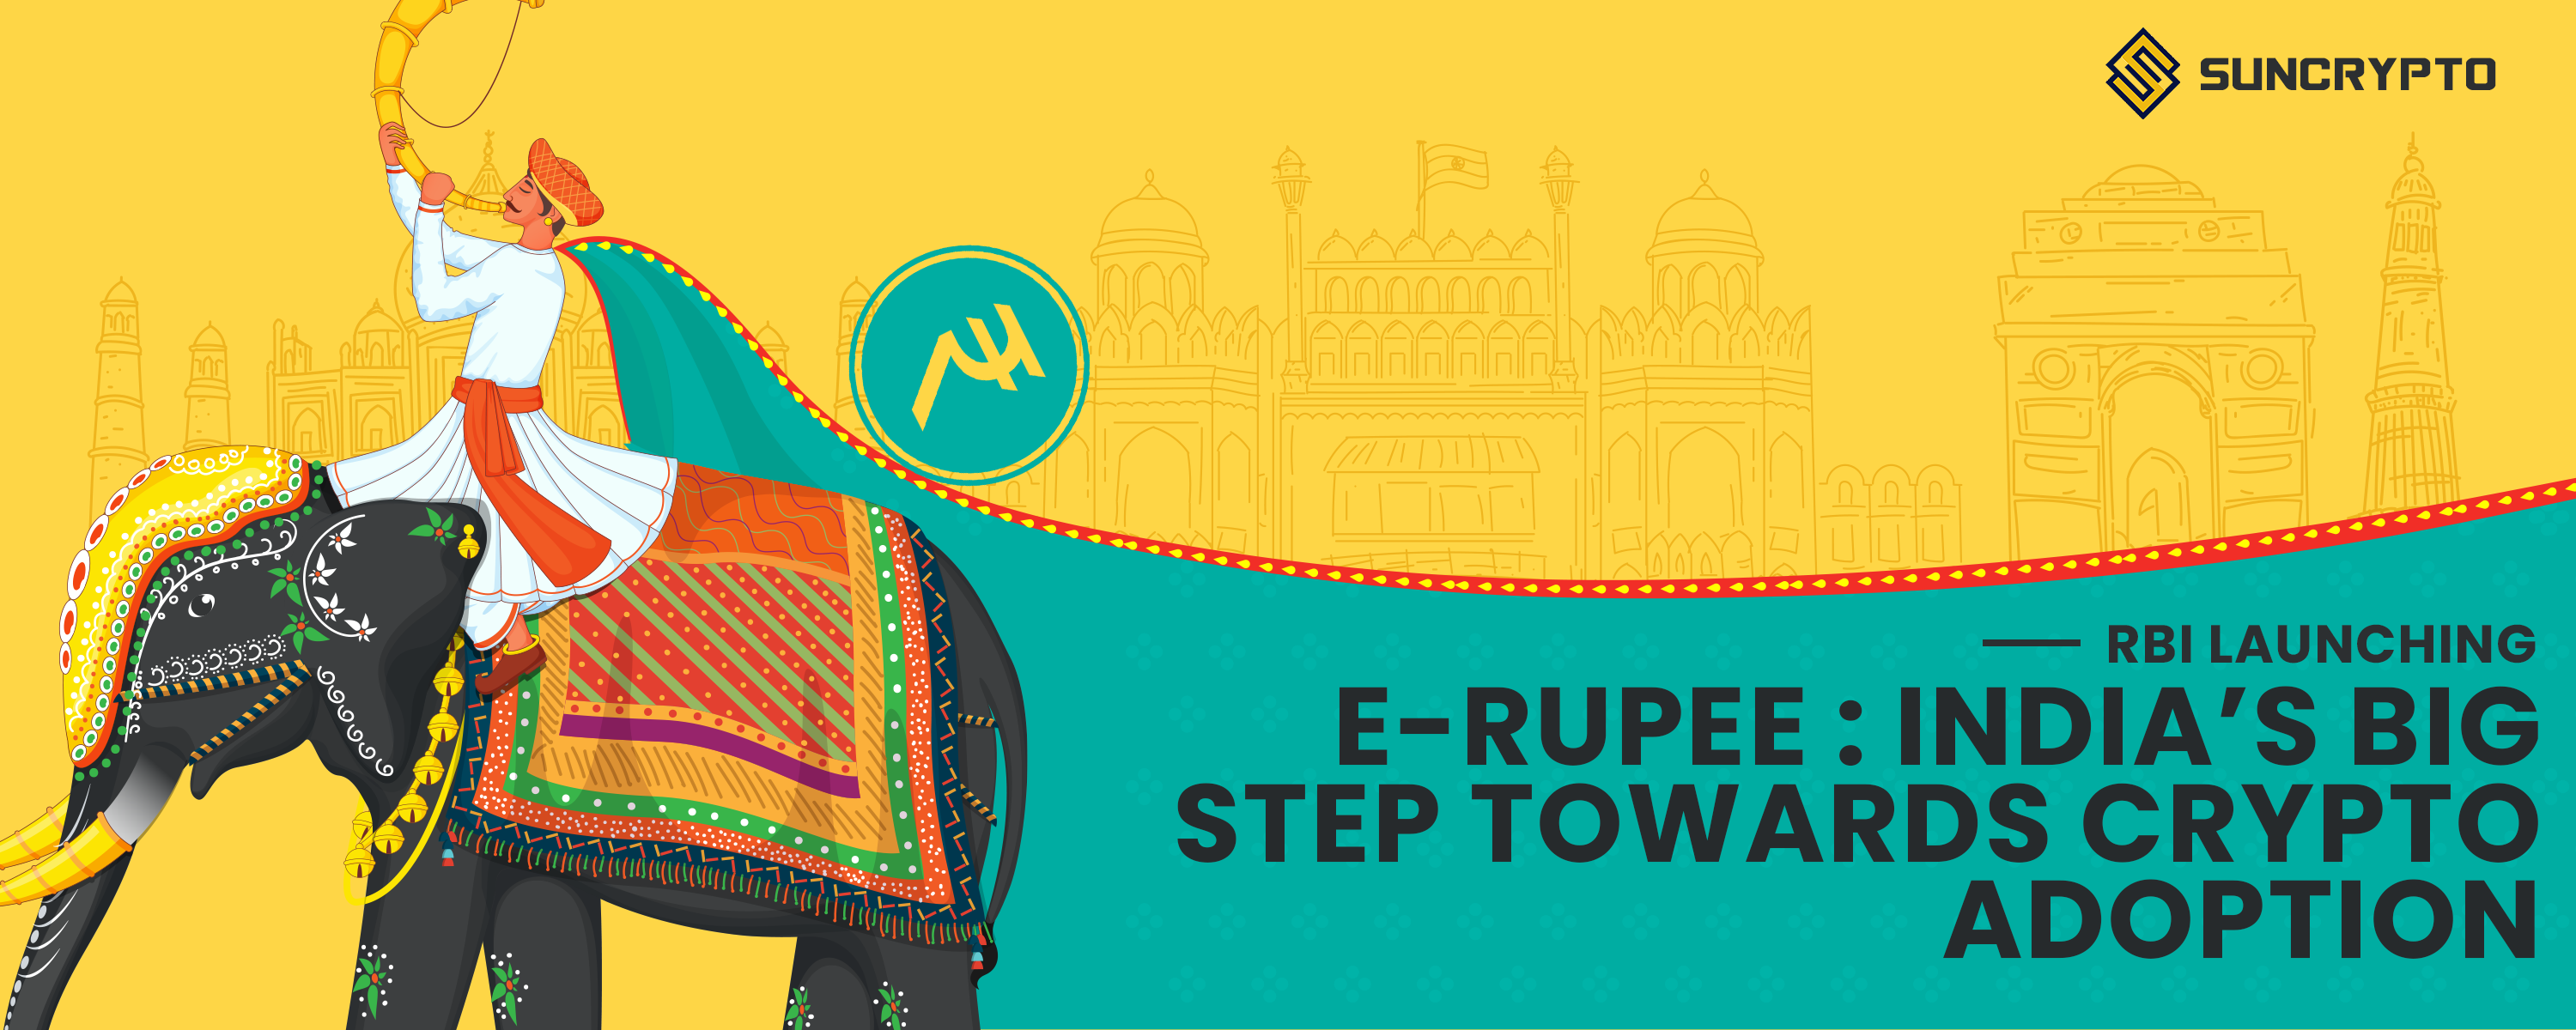 RBI Launching E-Rupee